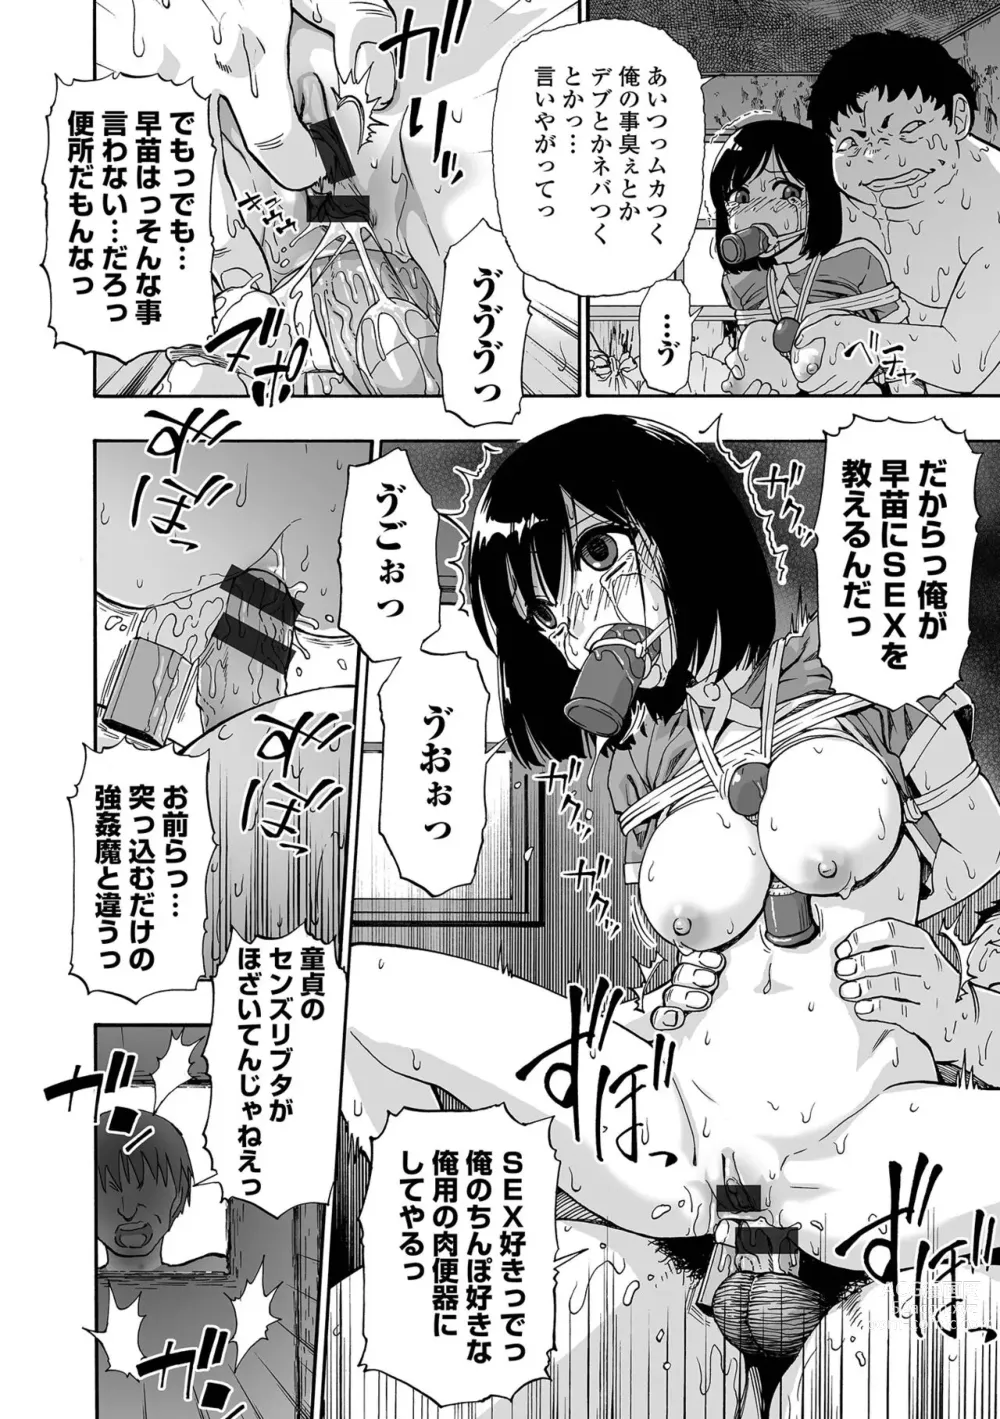 Page 32 of manga Garbage Dump Ch. 1-9